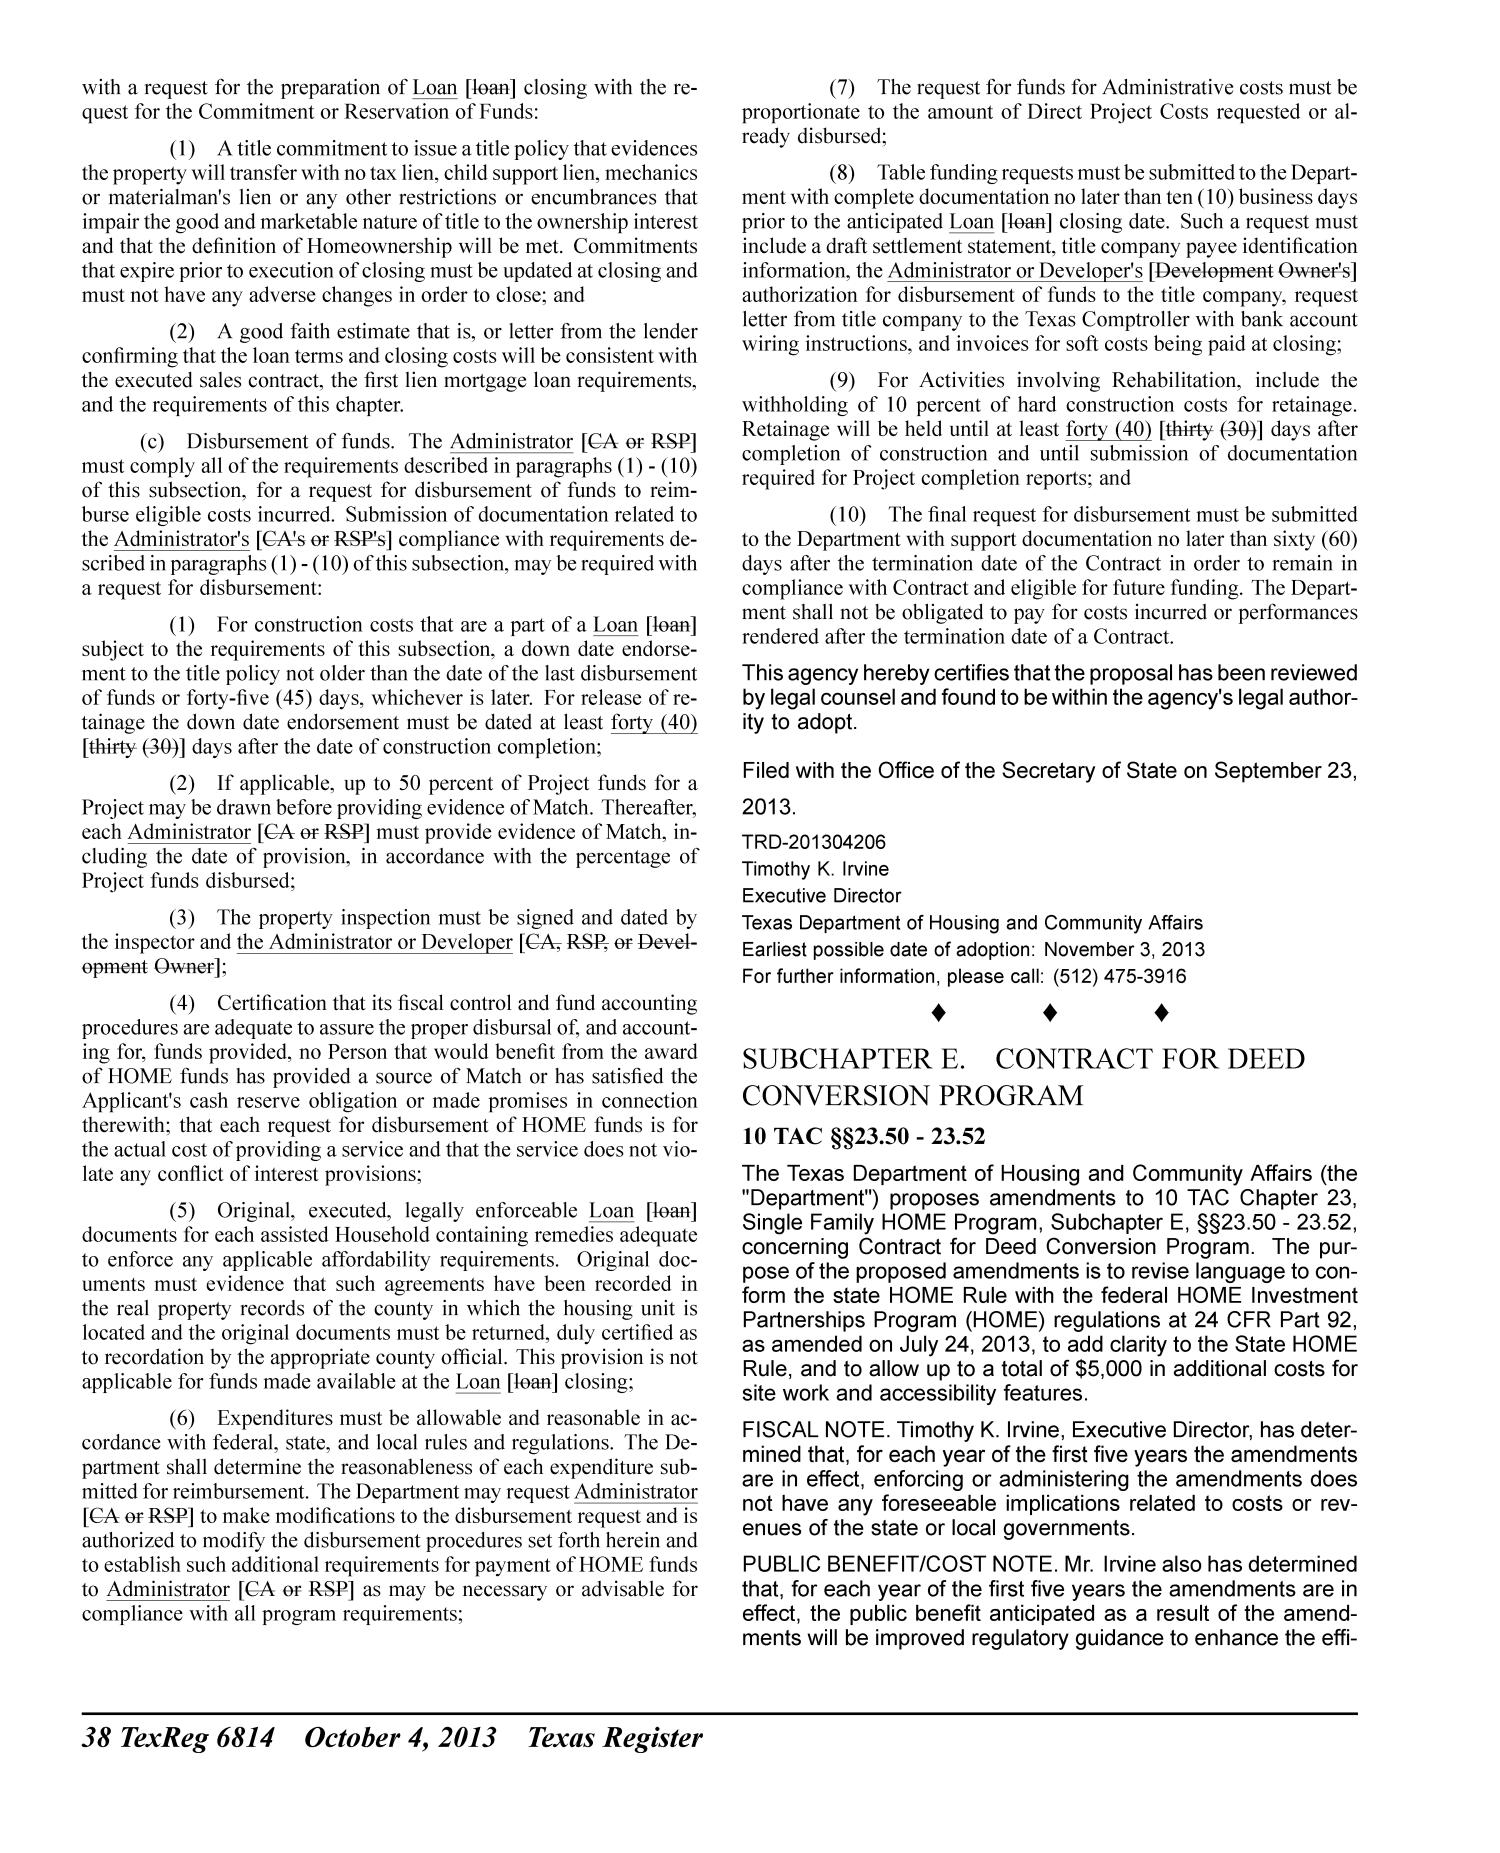 Texas Register, Volume 38, Number 40, Pages 6747-6996, October 4, 2013
                                                
                                                    6814
                                                